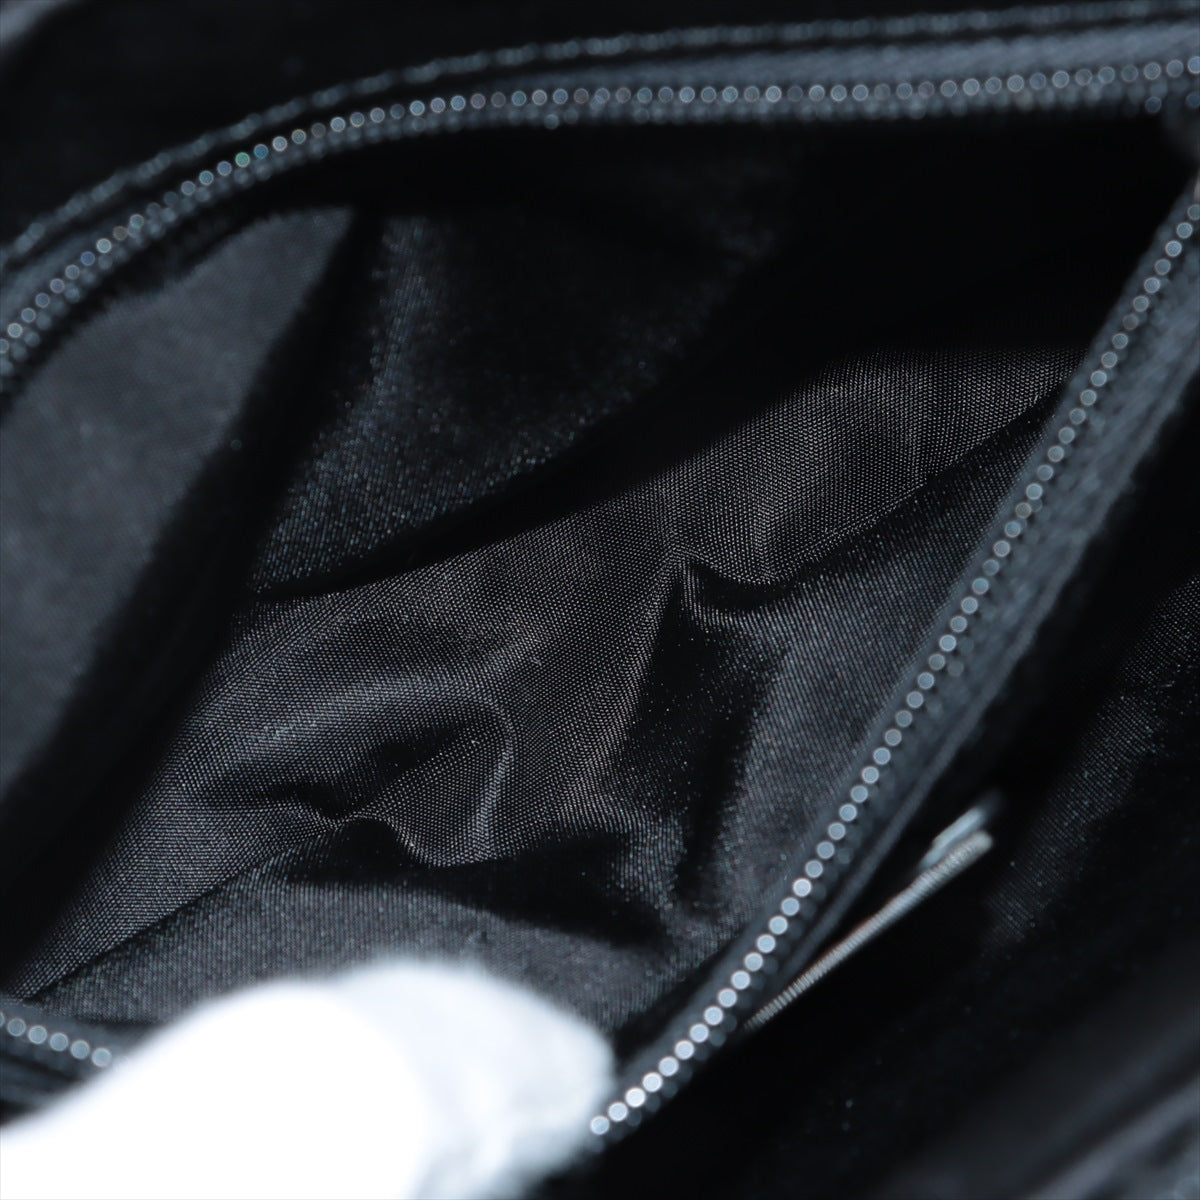 Prada Tessuto Nylon Sling backpack Black